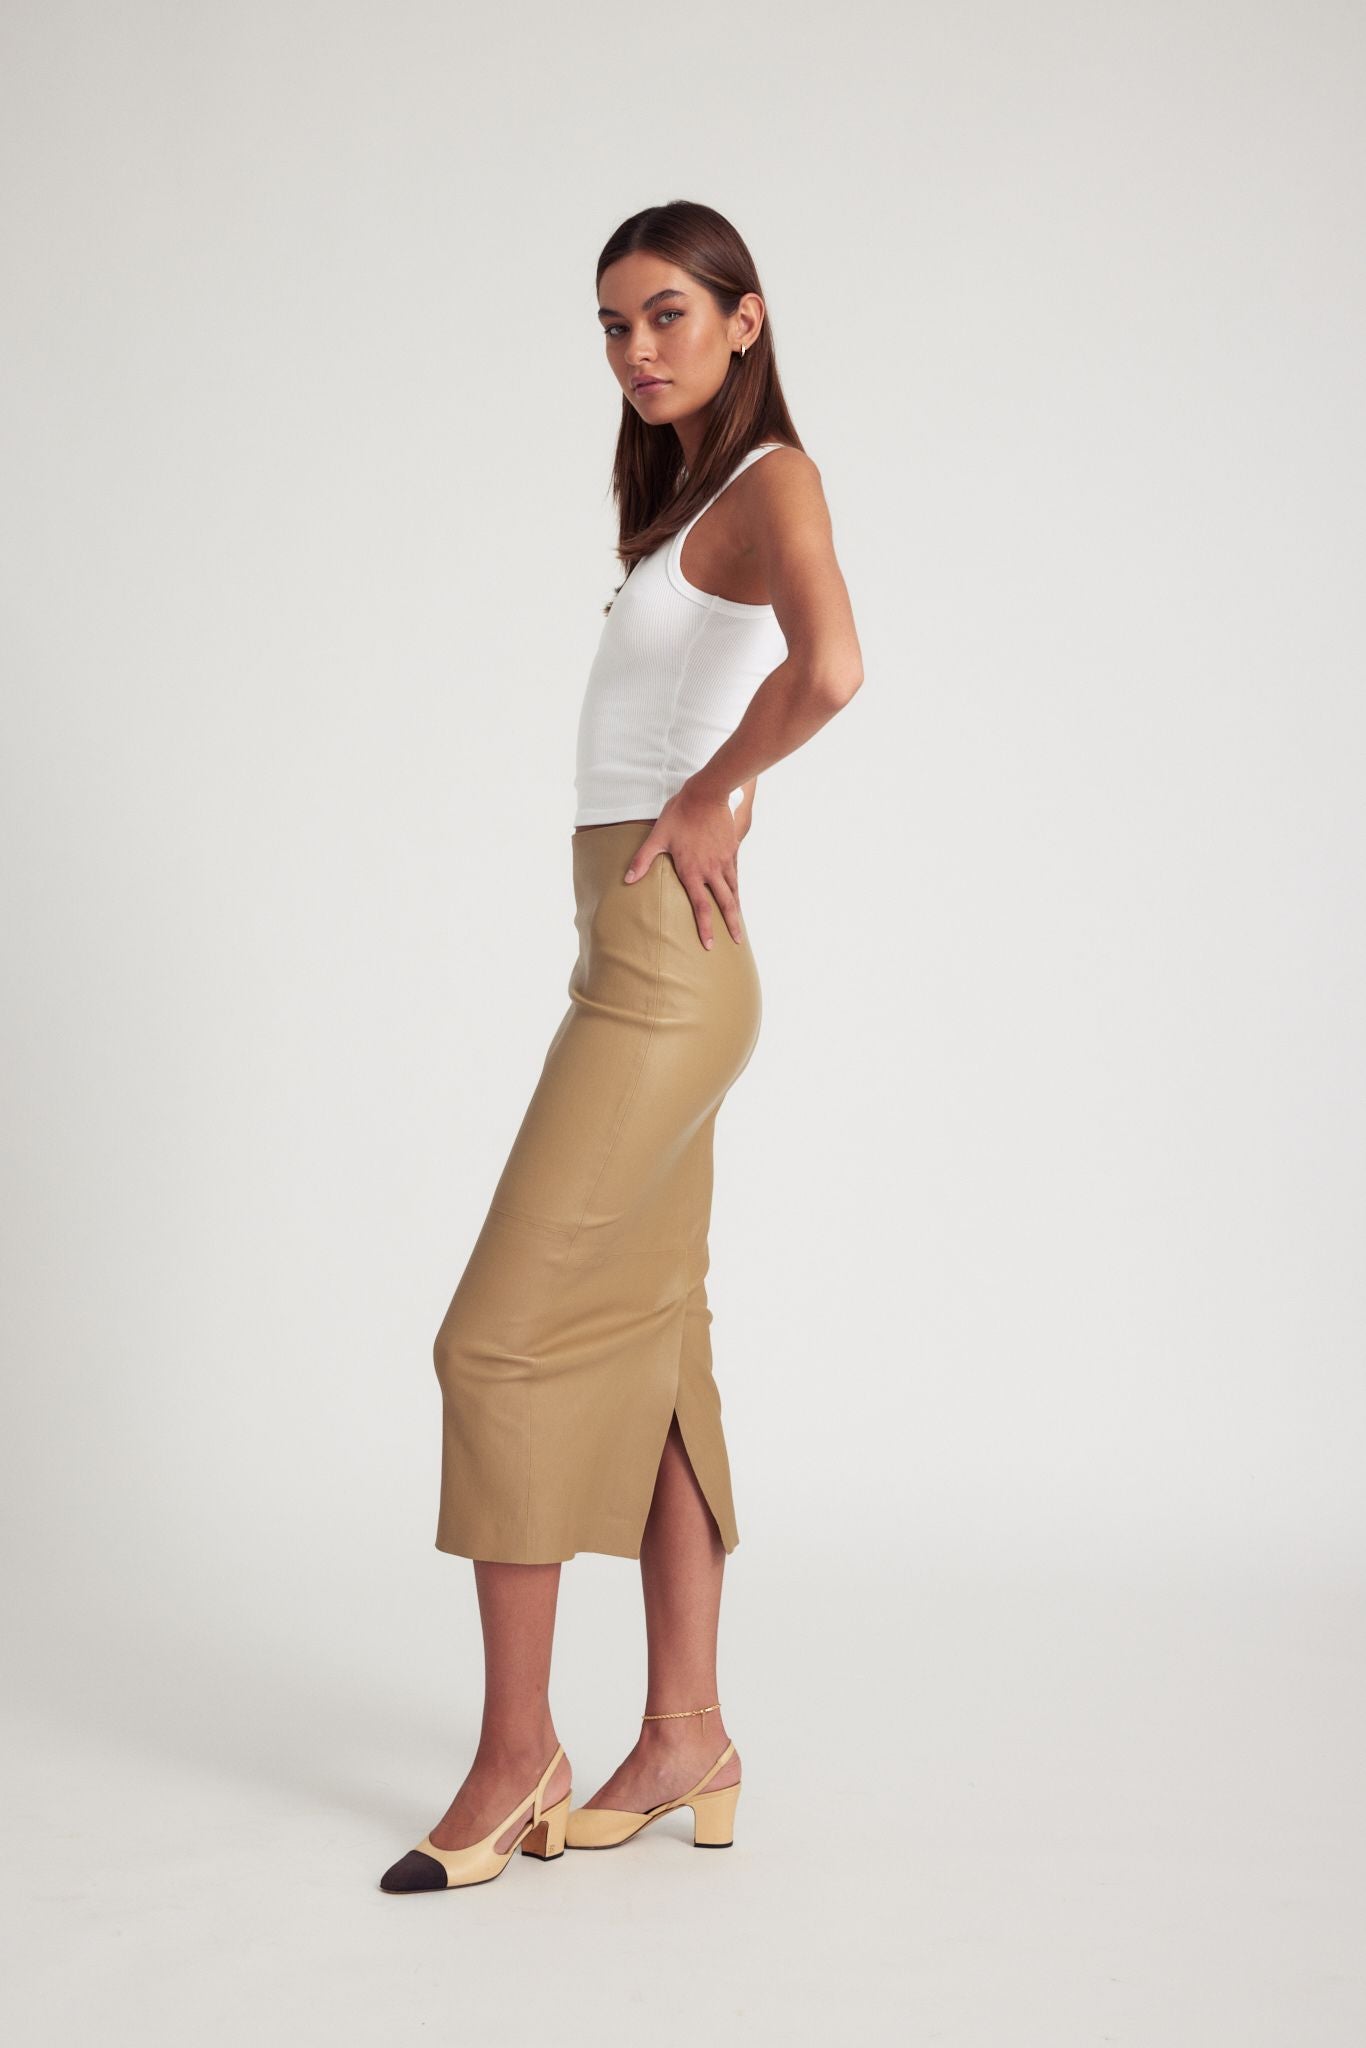 Khaki Leather Tube Skirt